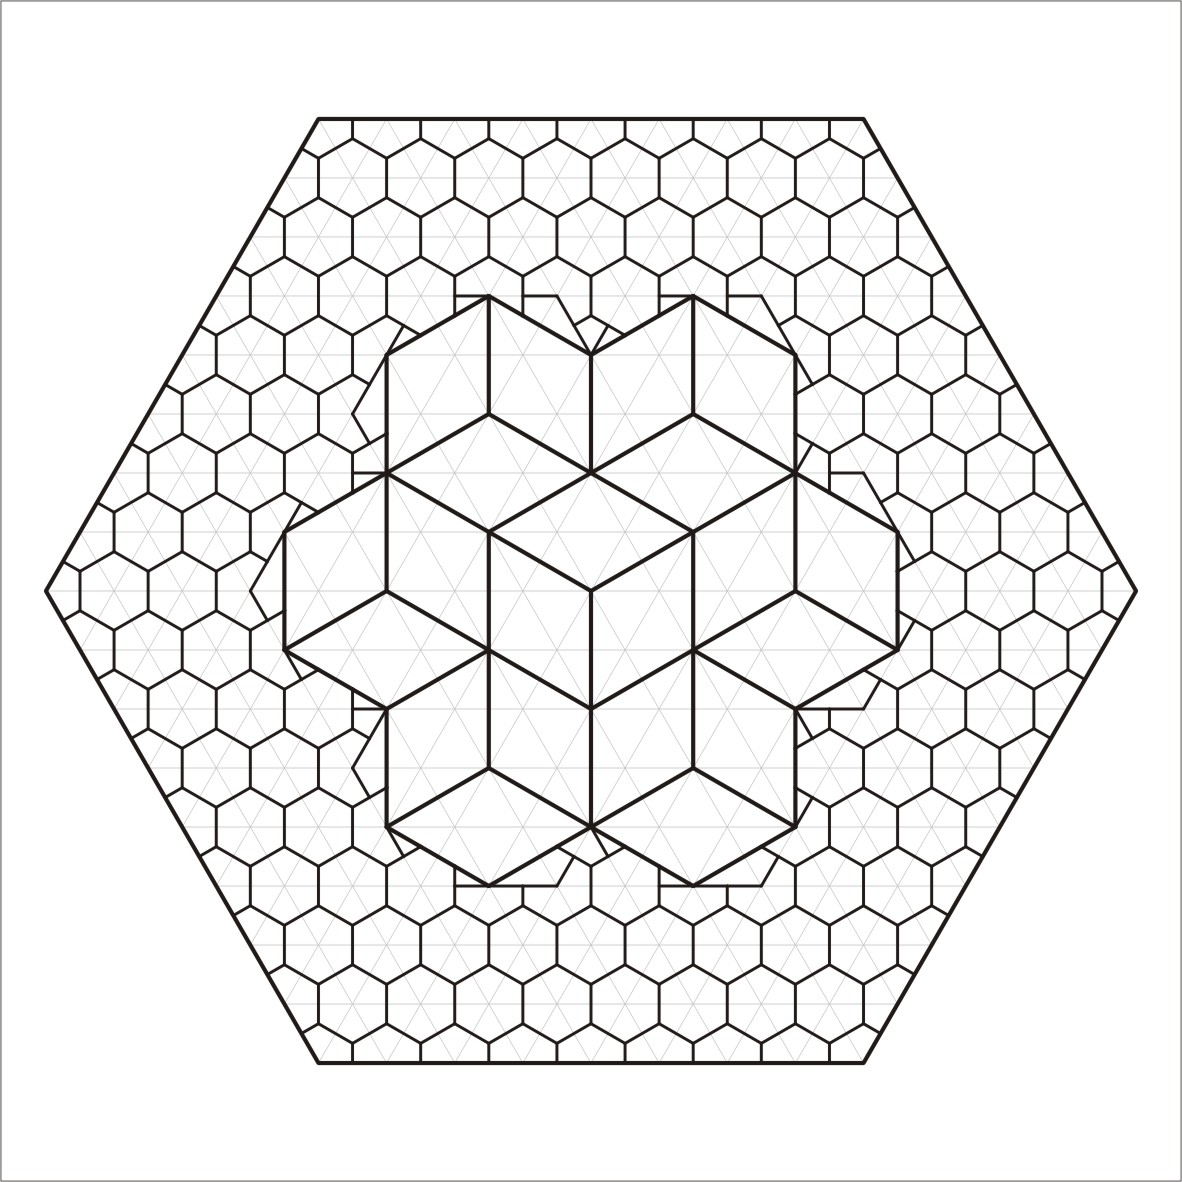 Cubes II